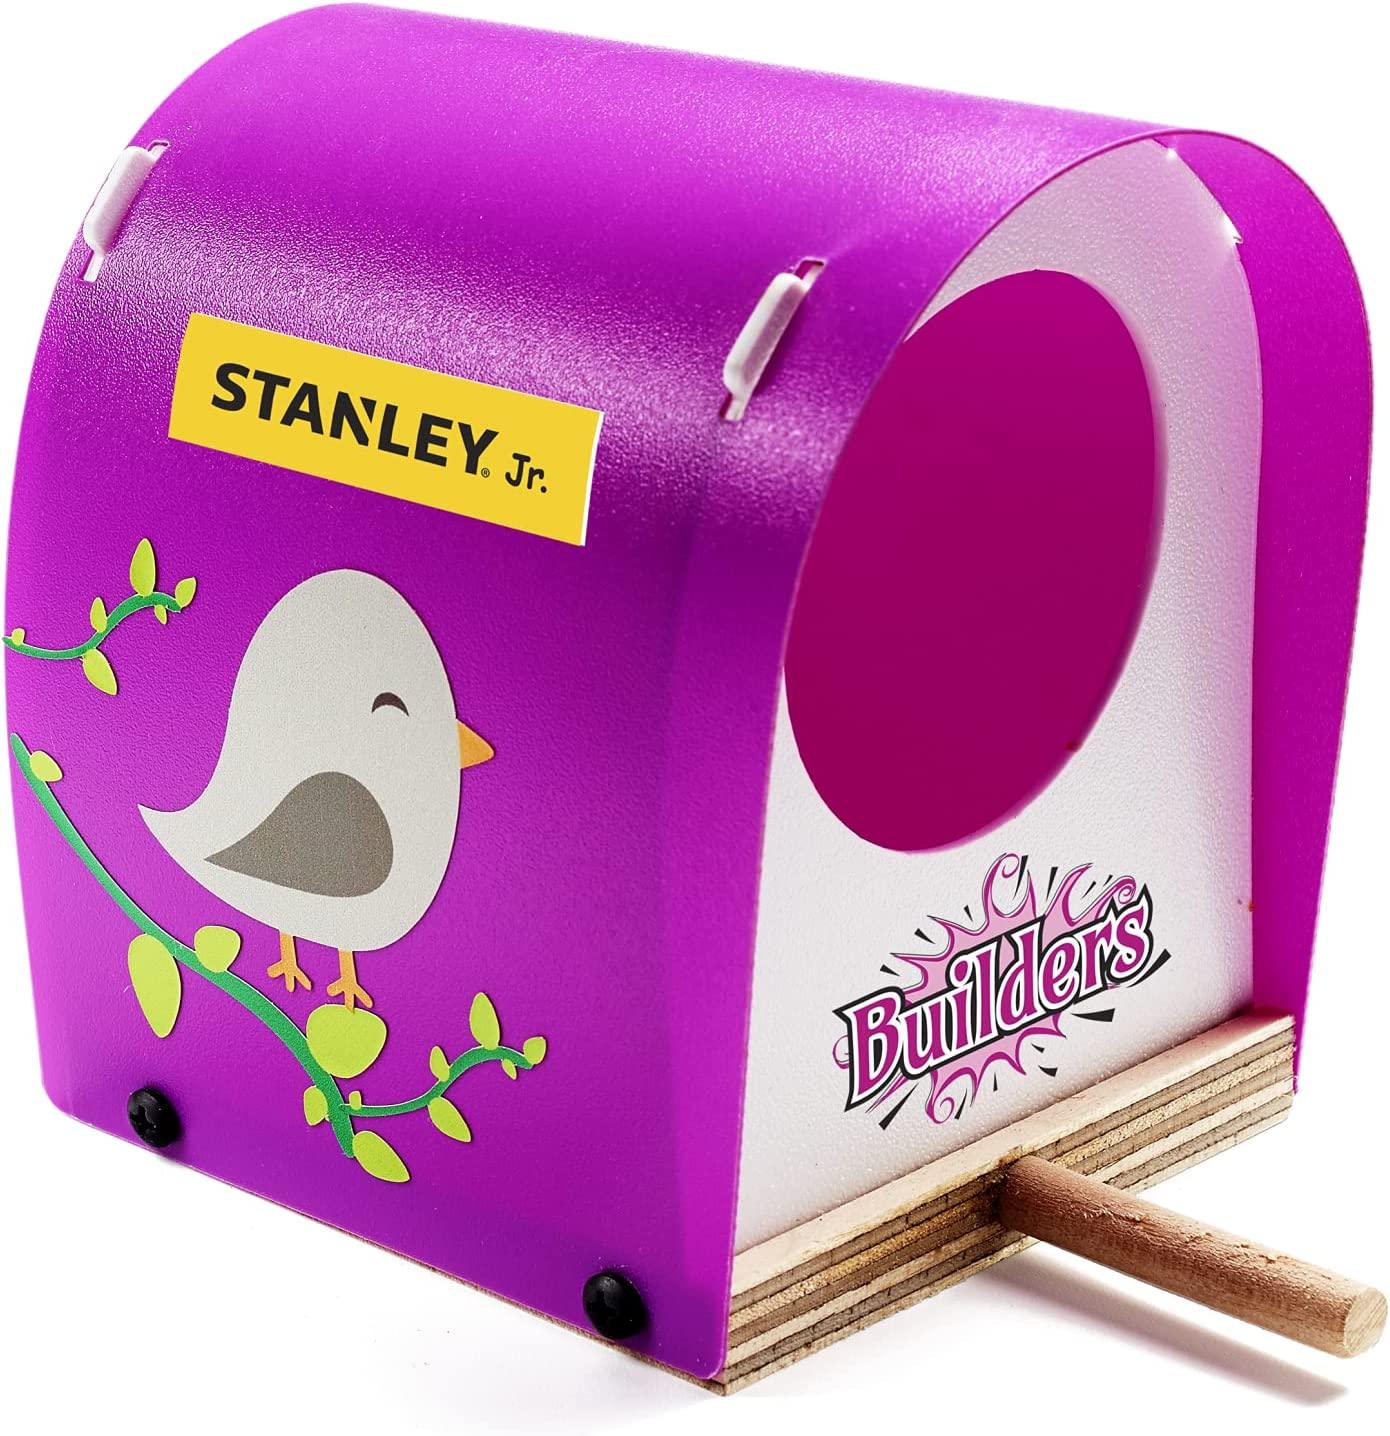 Stanley Jr.: „Mini Birdhouse“ statybos rinkinys